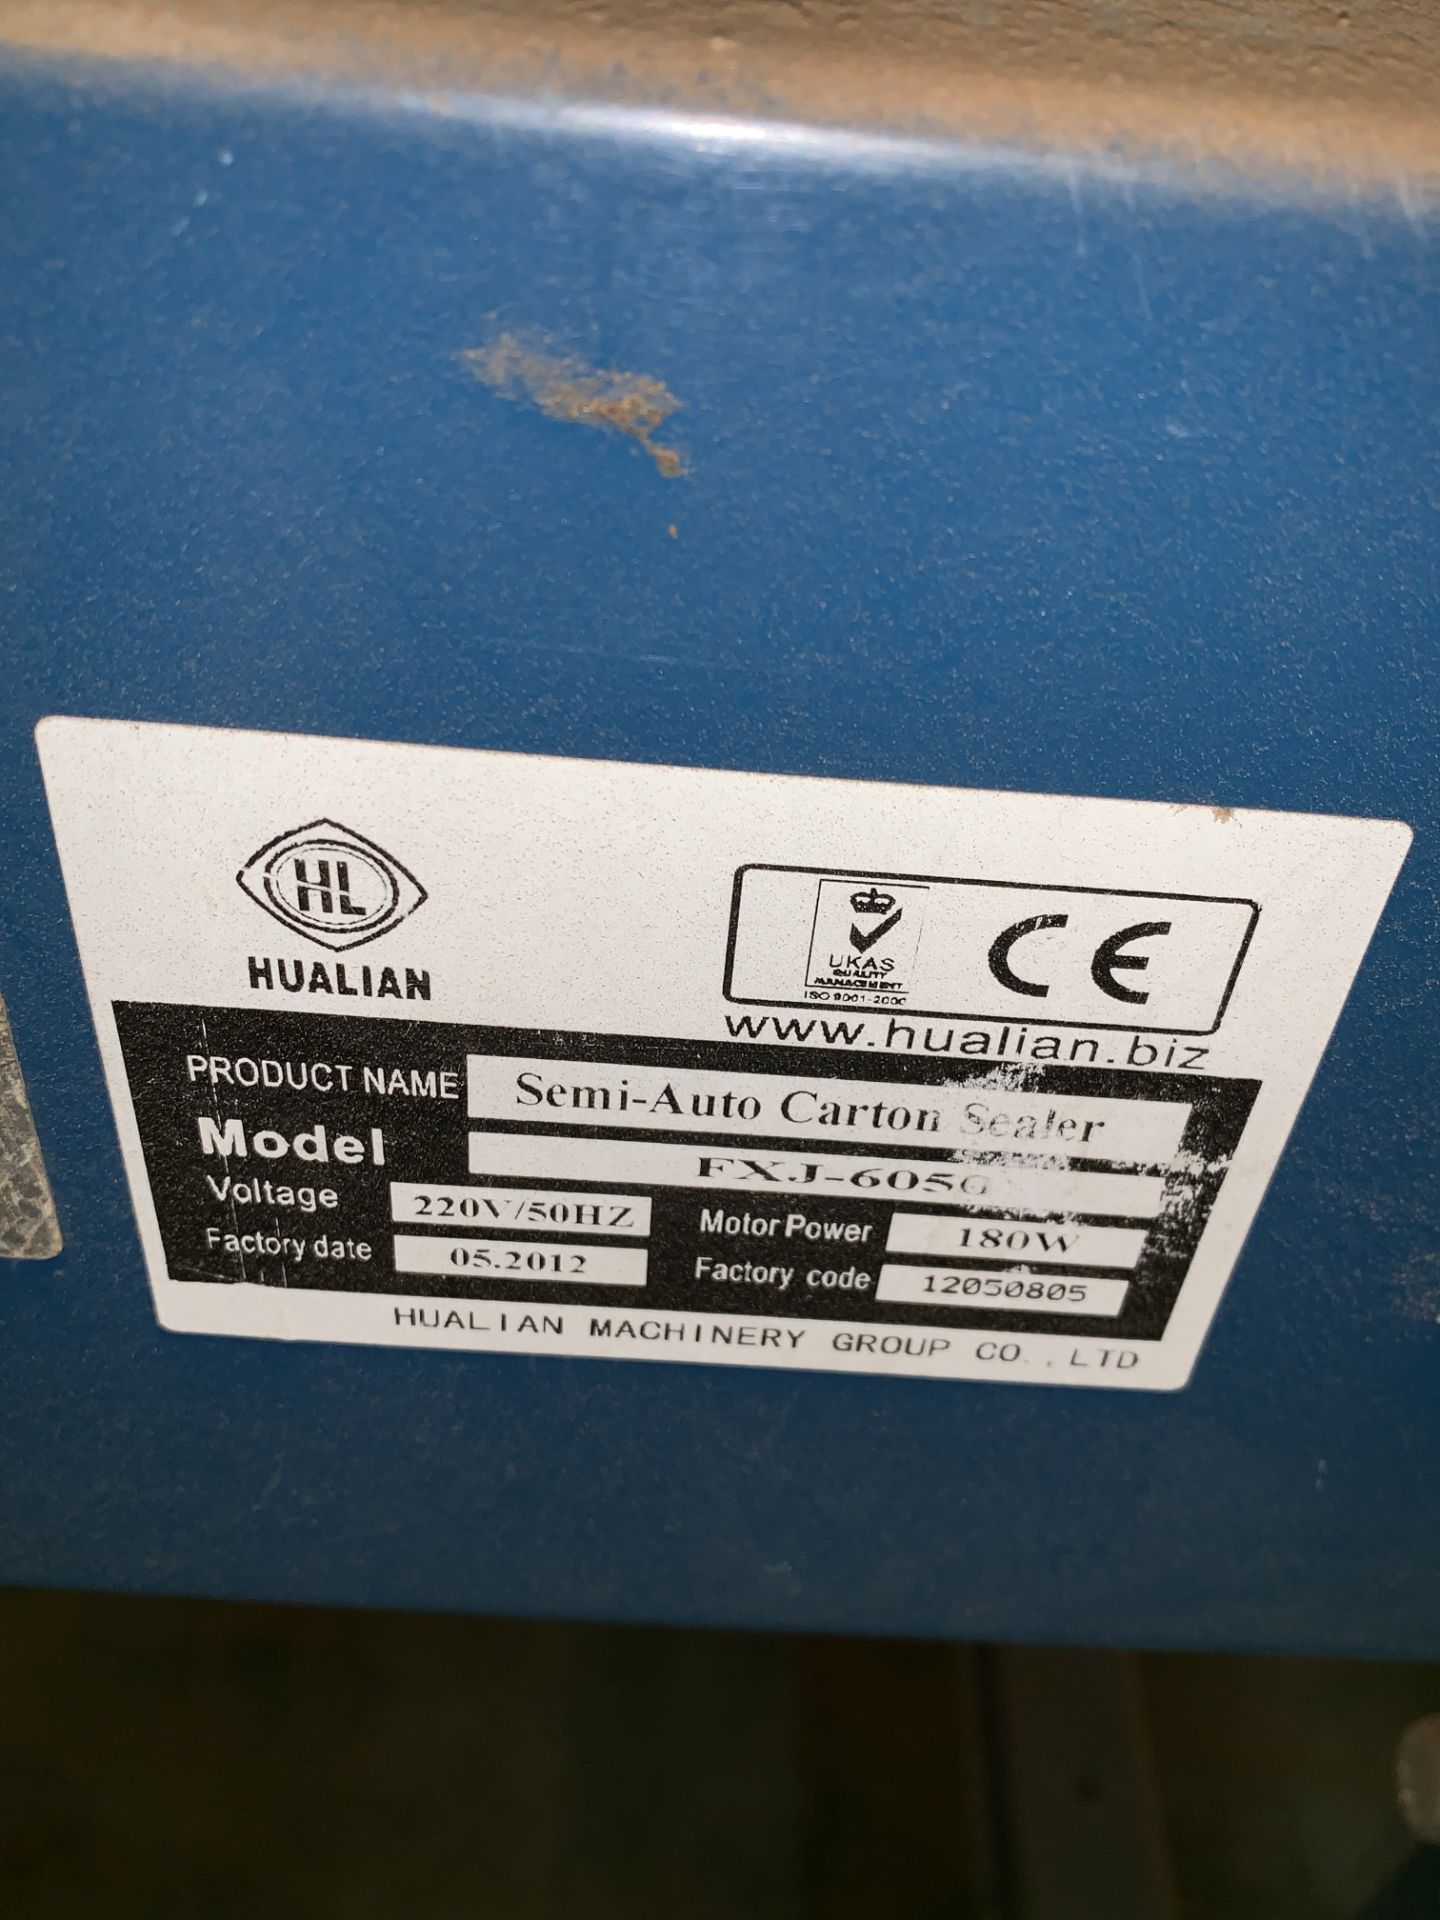 Hualian semi automatic carton sealer - Image 2 of 2